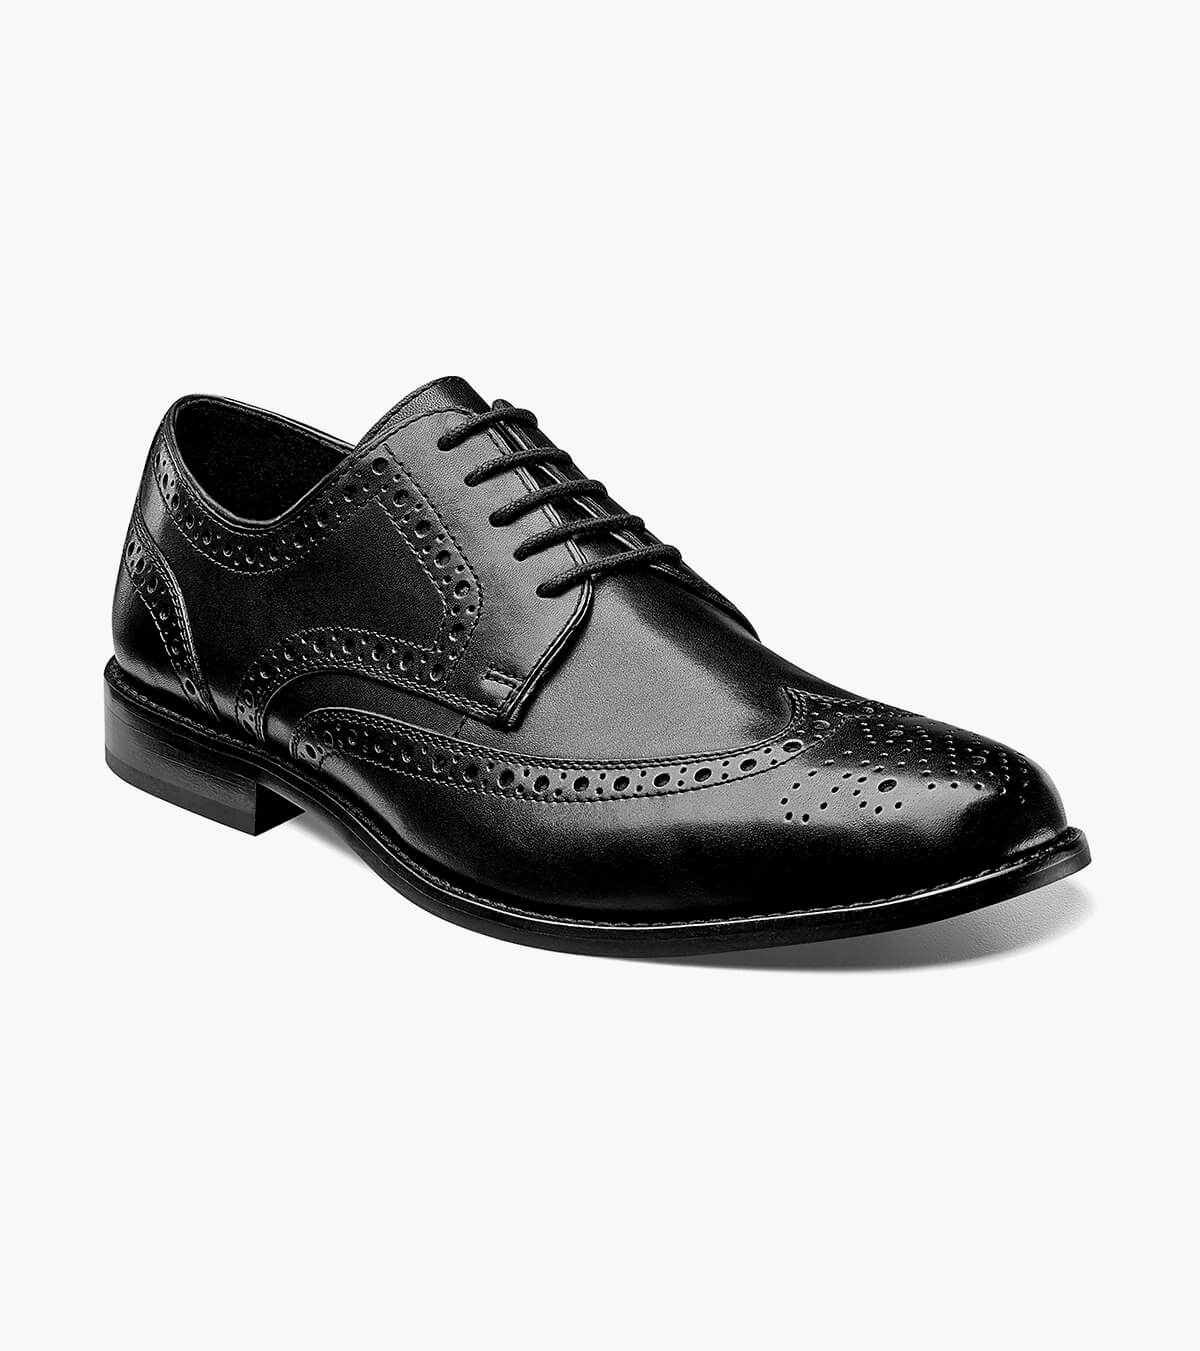 black wingtip dress shoes